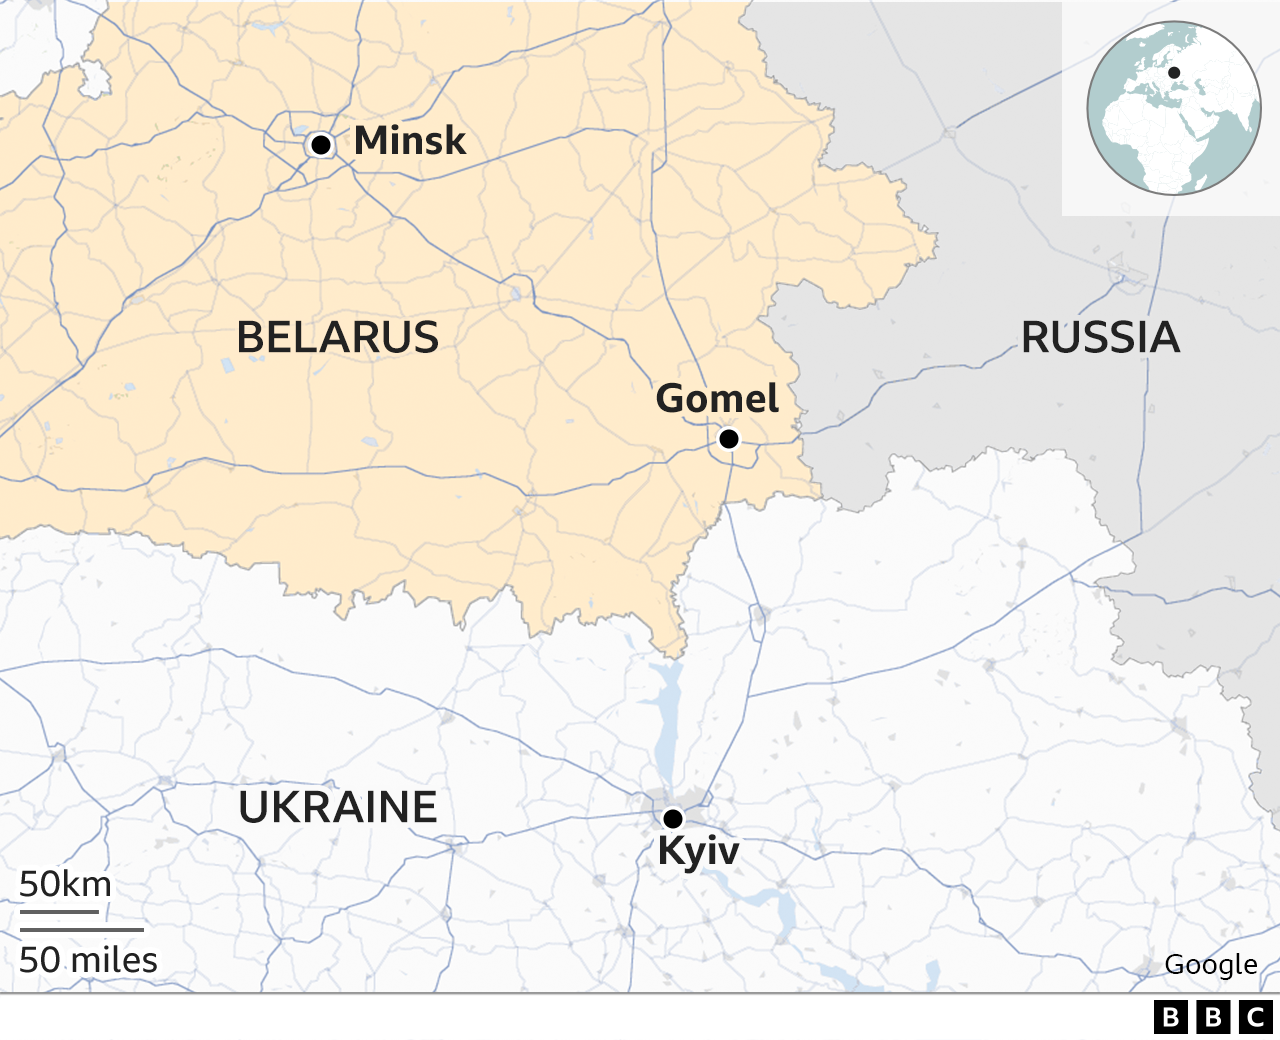 Map of Belarus, Ukraine and Russia